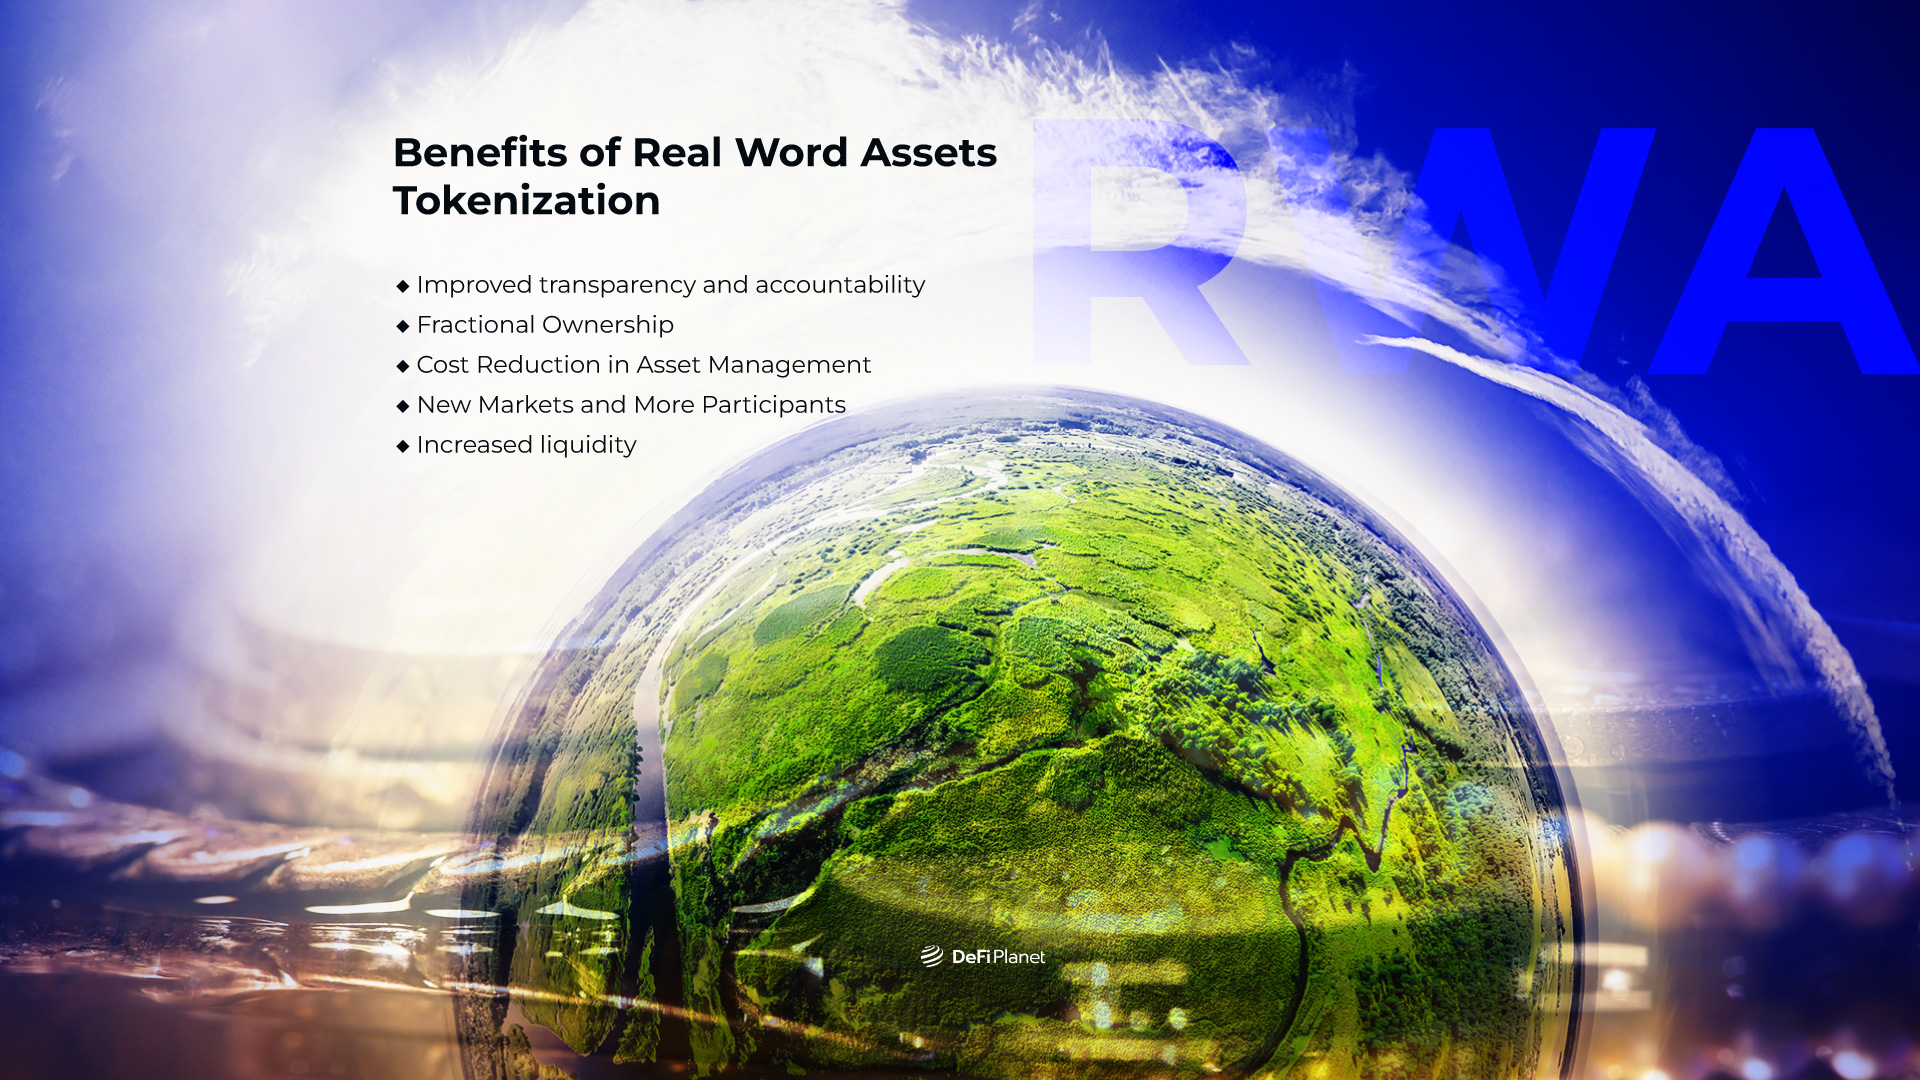 Benefits of Real Word Assets  (RWA) Tokenization
